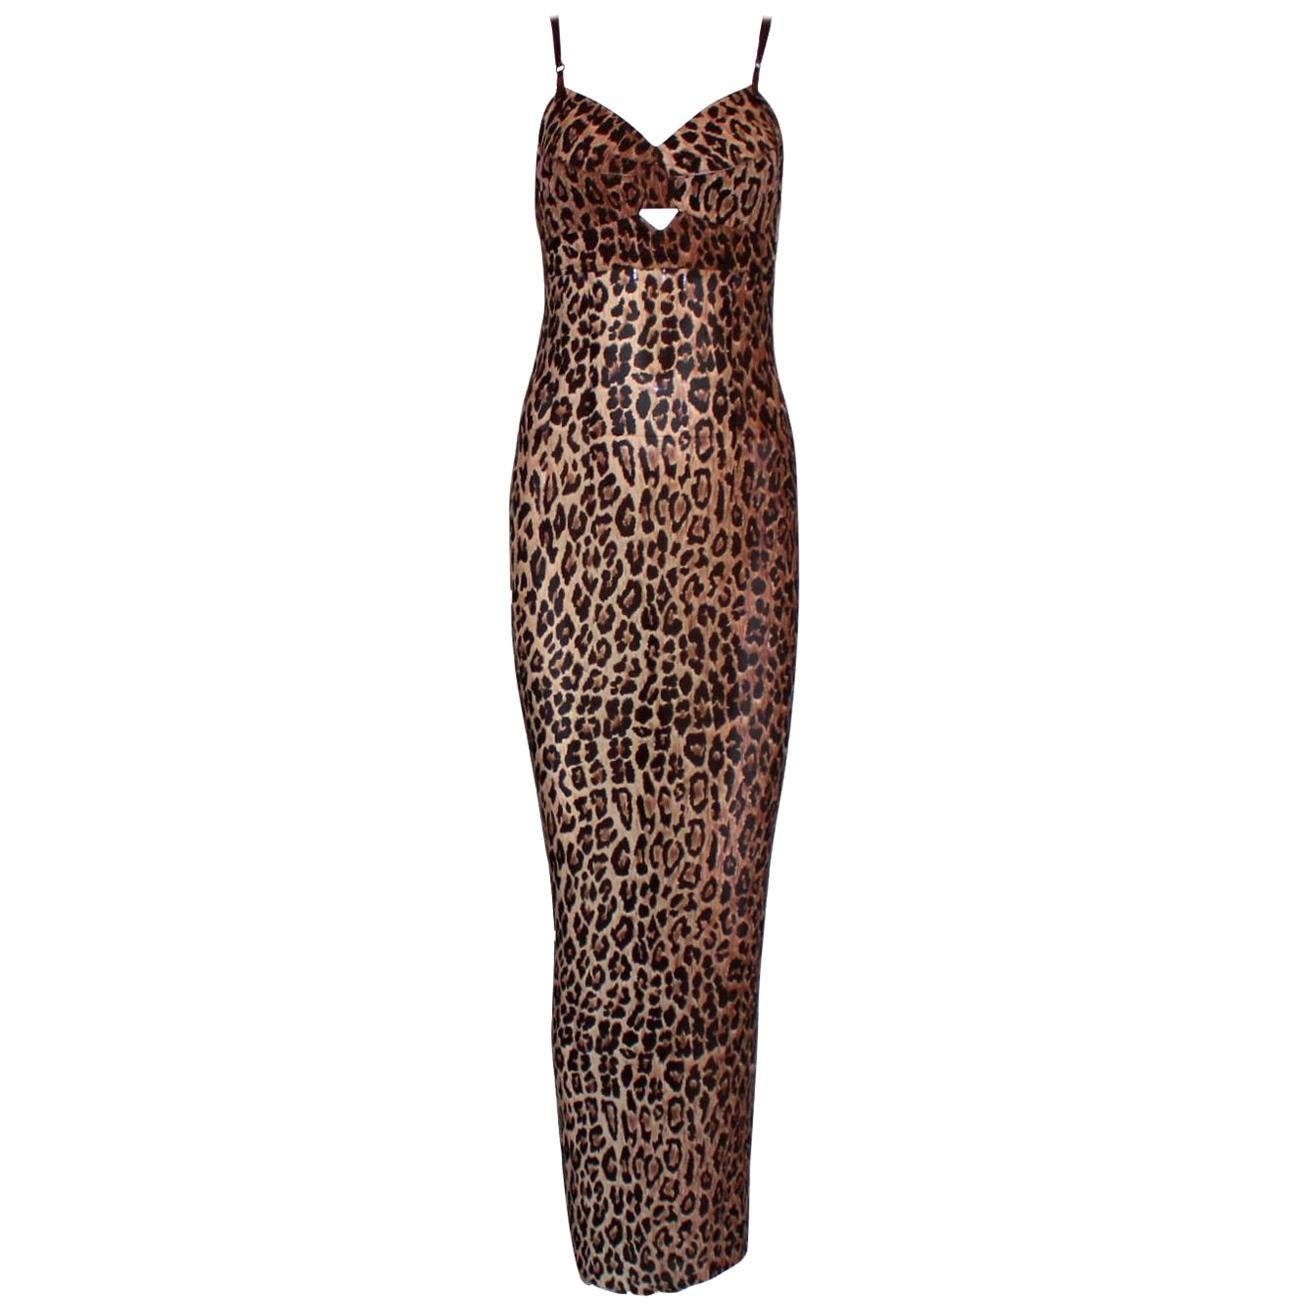 Collectable Dolce & Gabbana Vintage Cheetah Leopard Print Maxi Dress Gown 